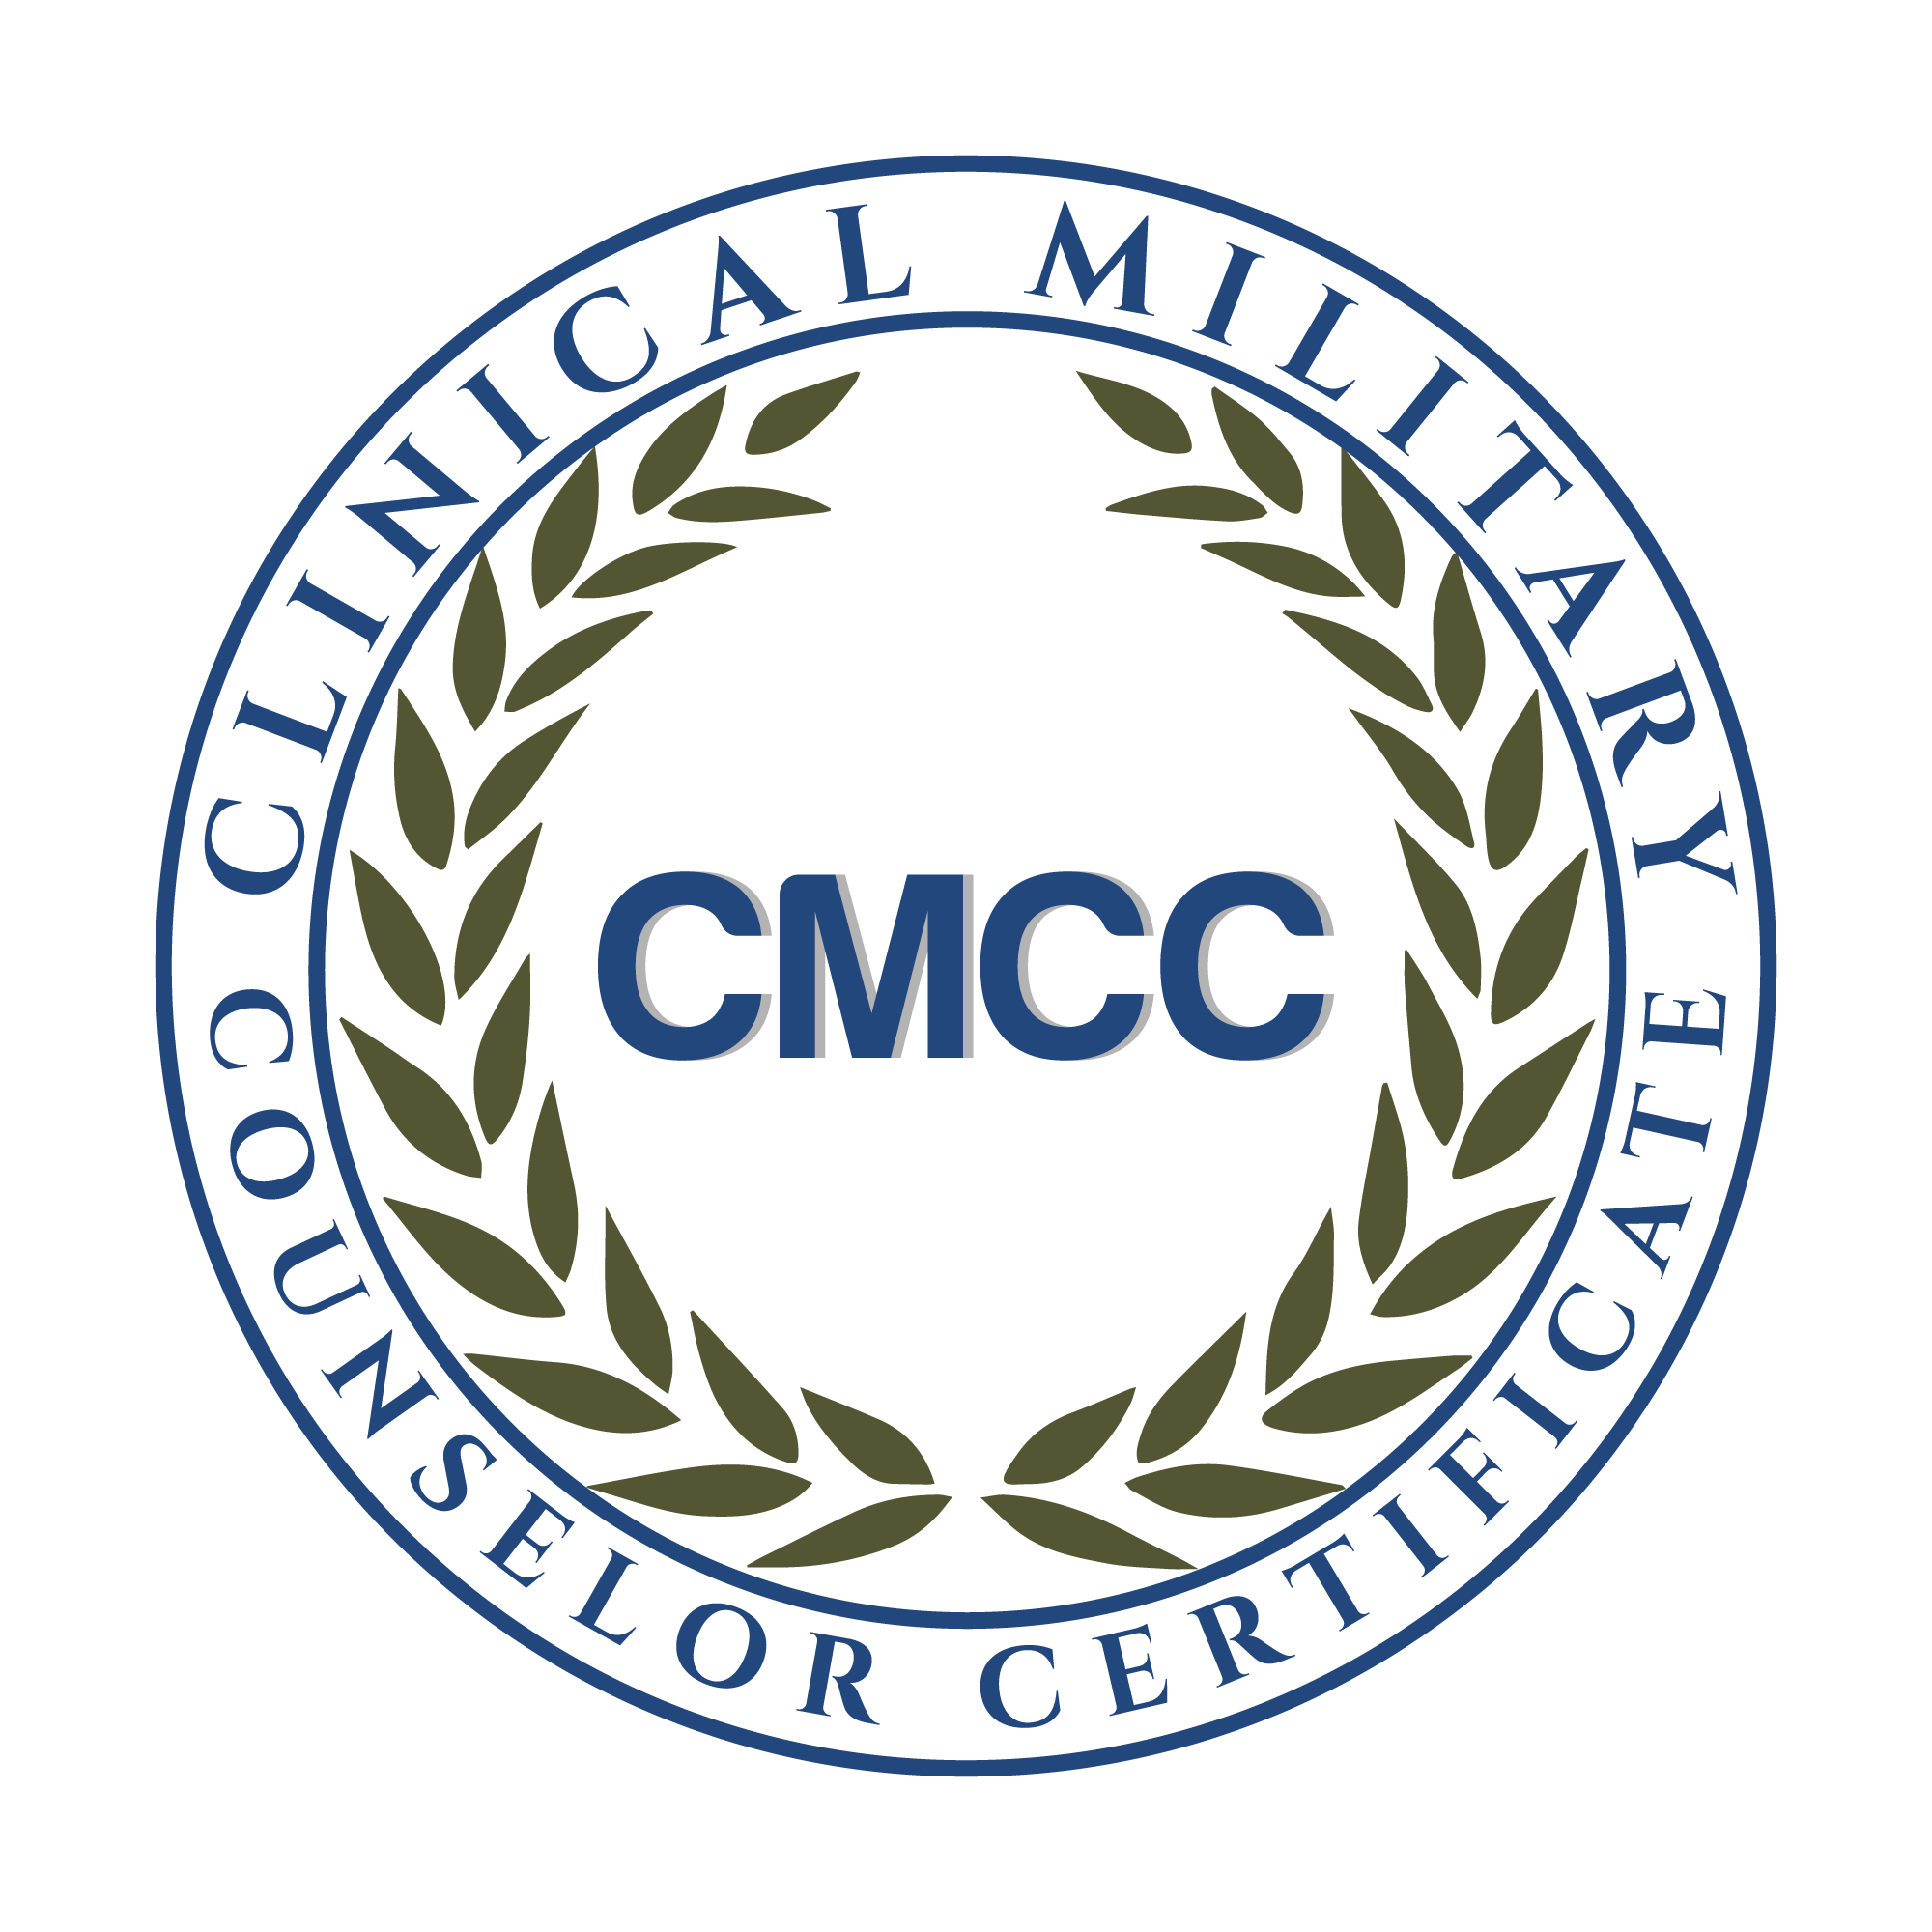 CMCC Seal